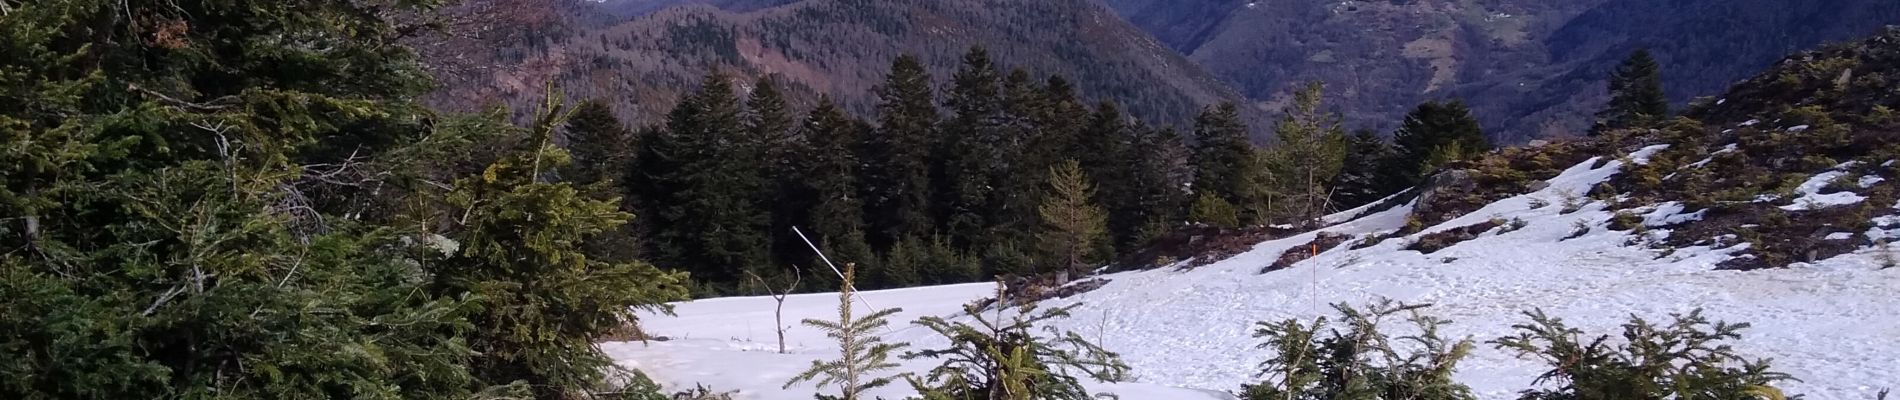 Tocht Sneeuwschoenen Boutx - 2021-02-16  raquettes le mourtis - Photo